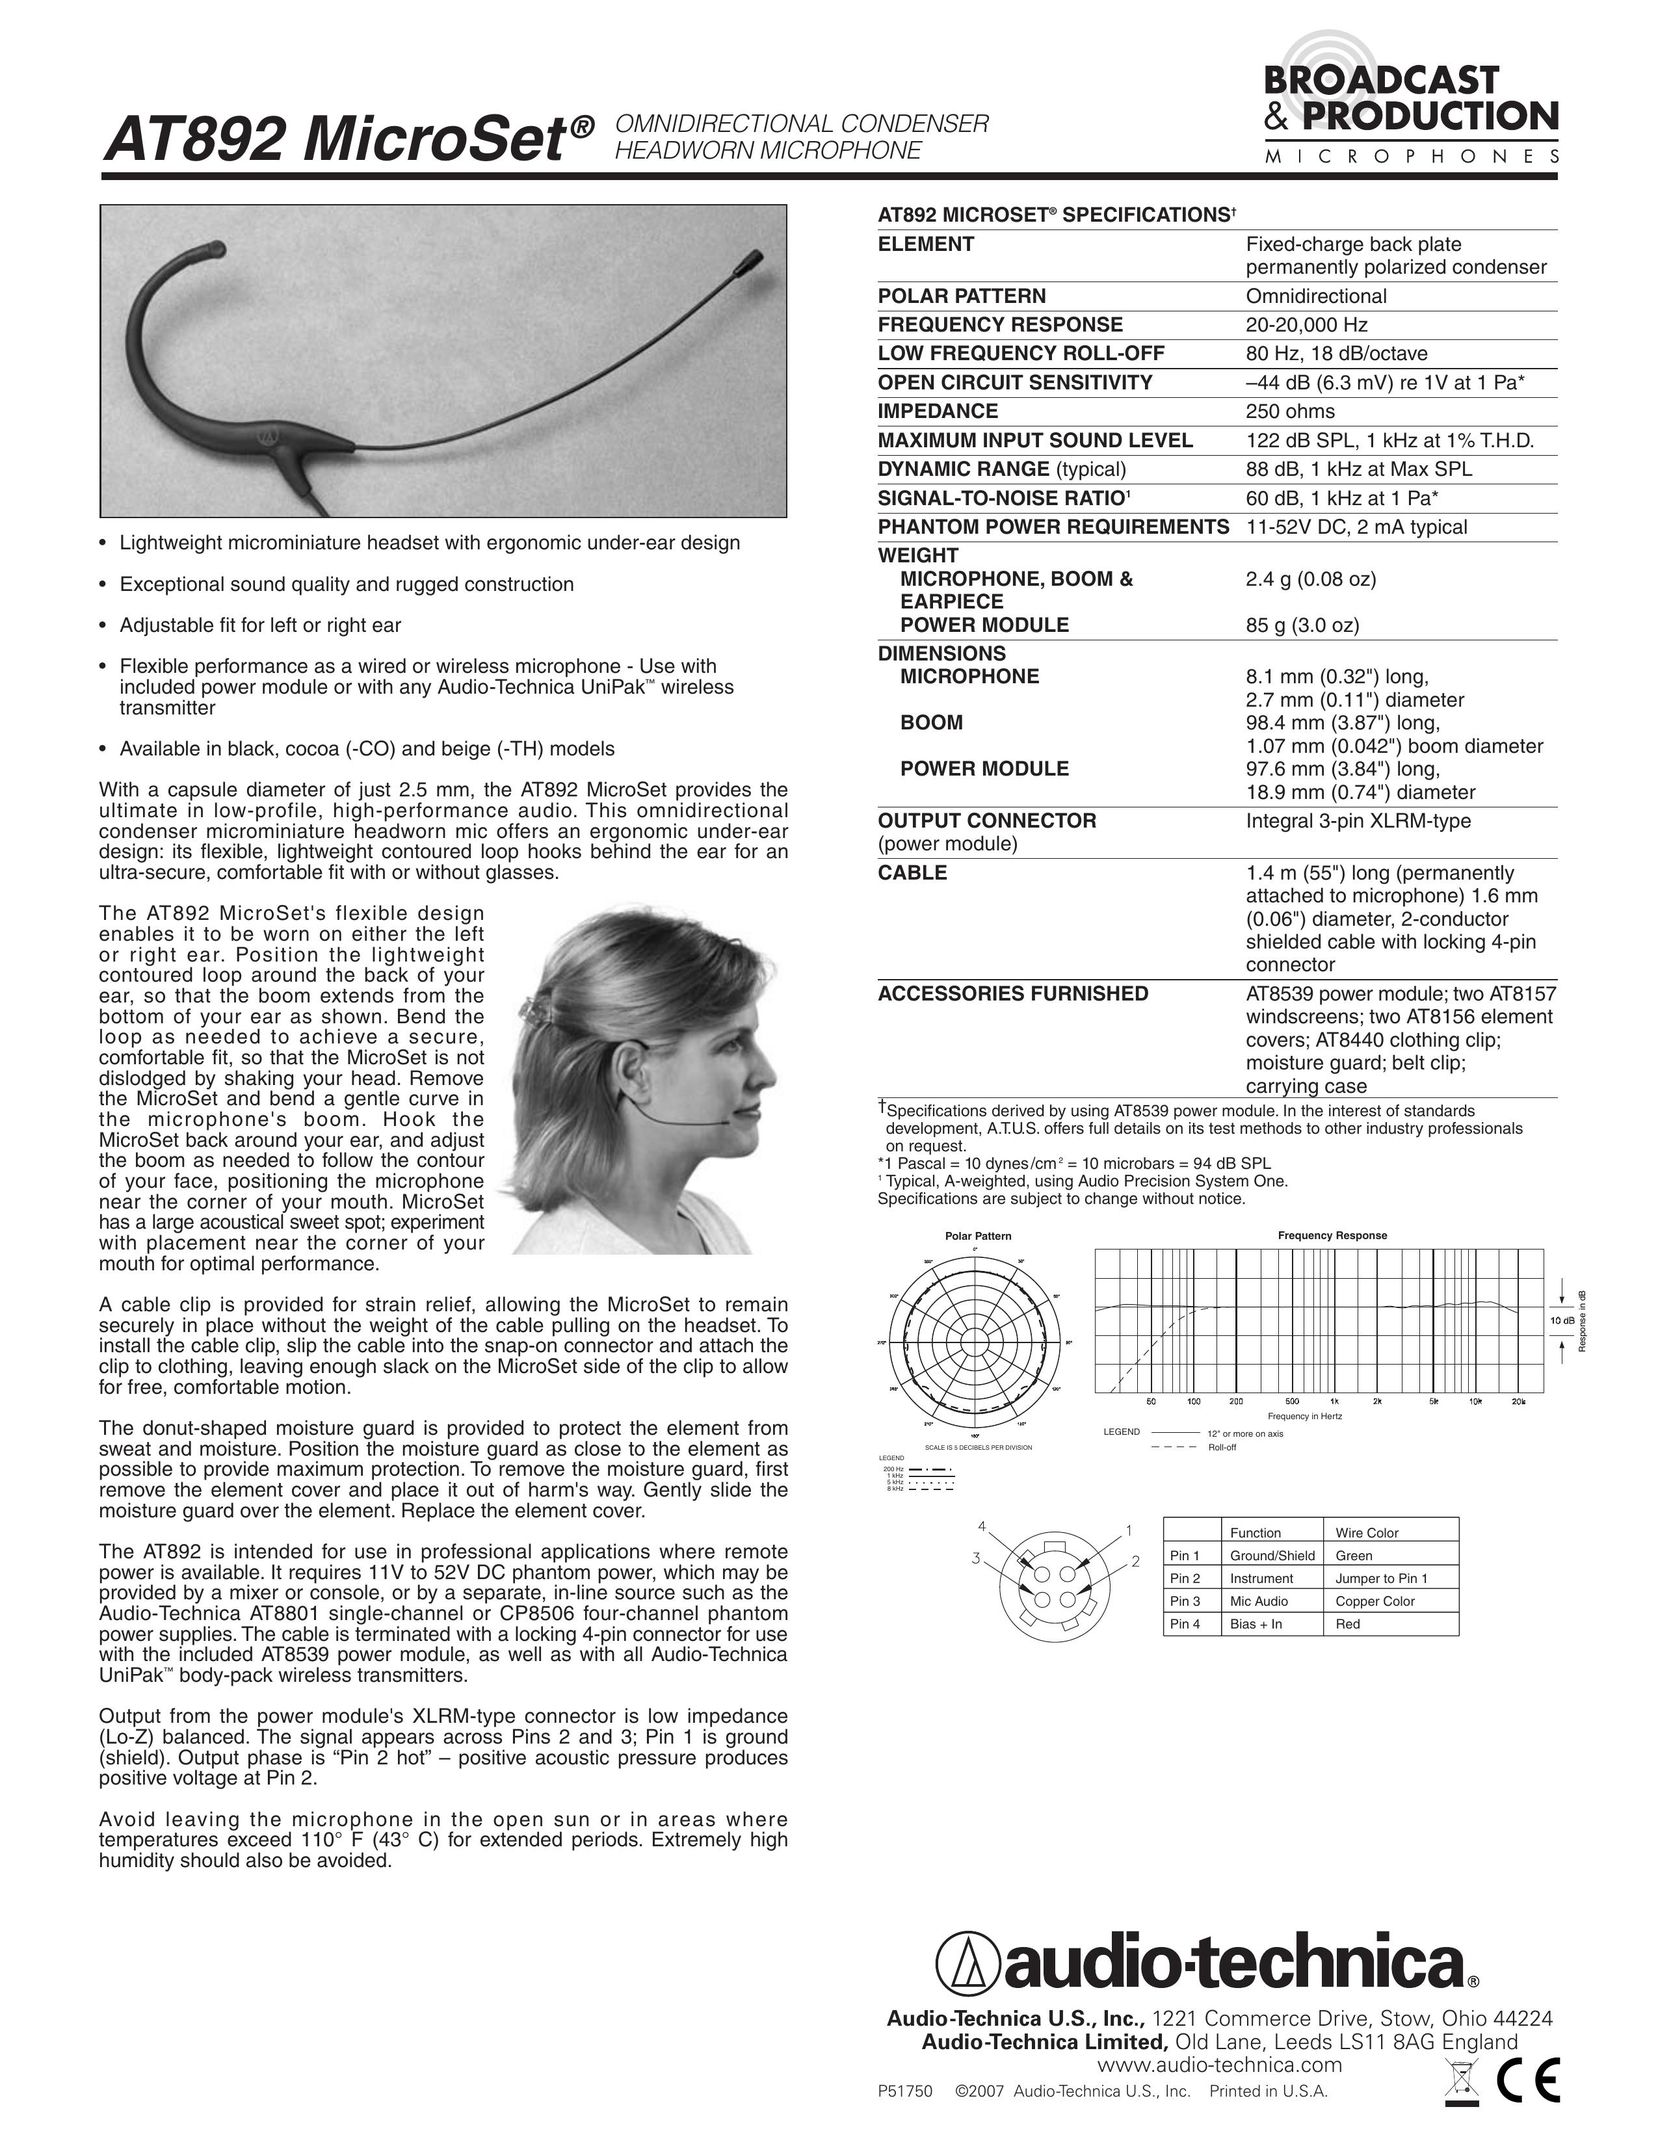 Audio-Technica AT892 Headphones User Manual